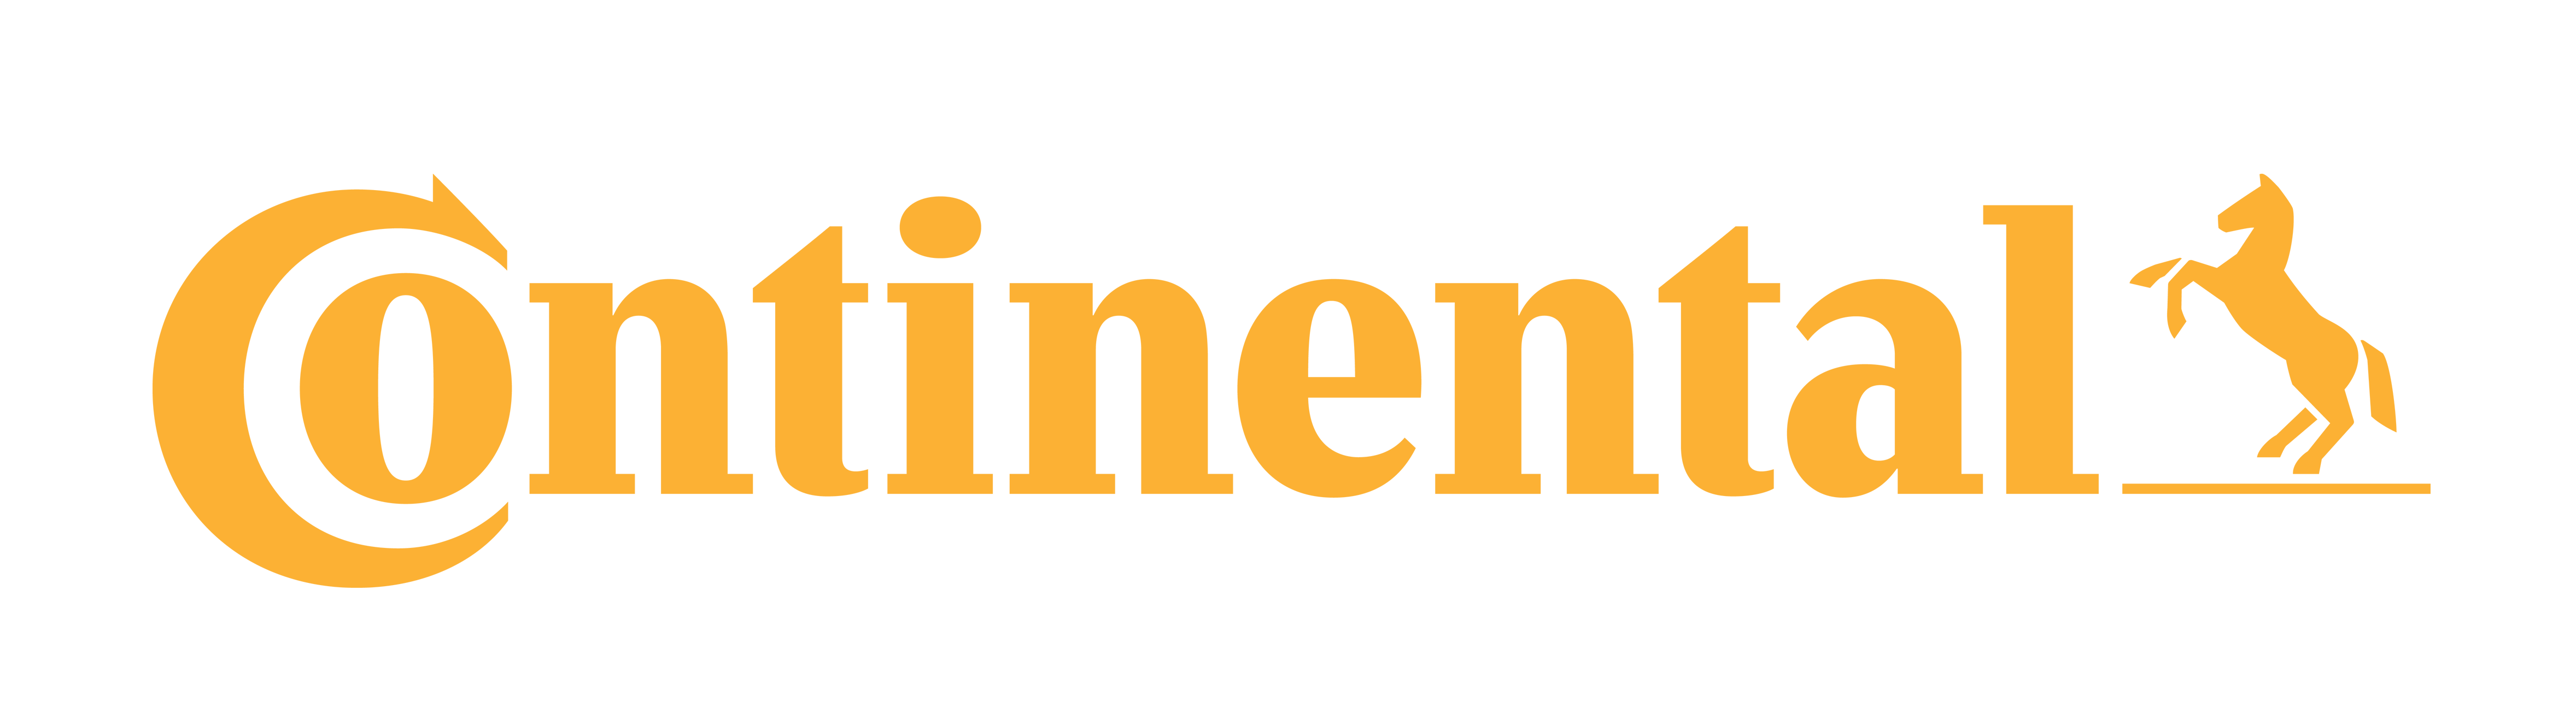 Continental Logo PNG - 179697